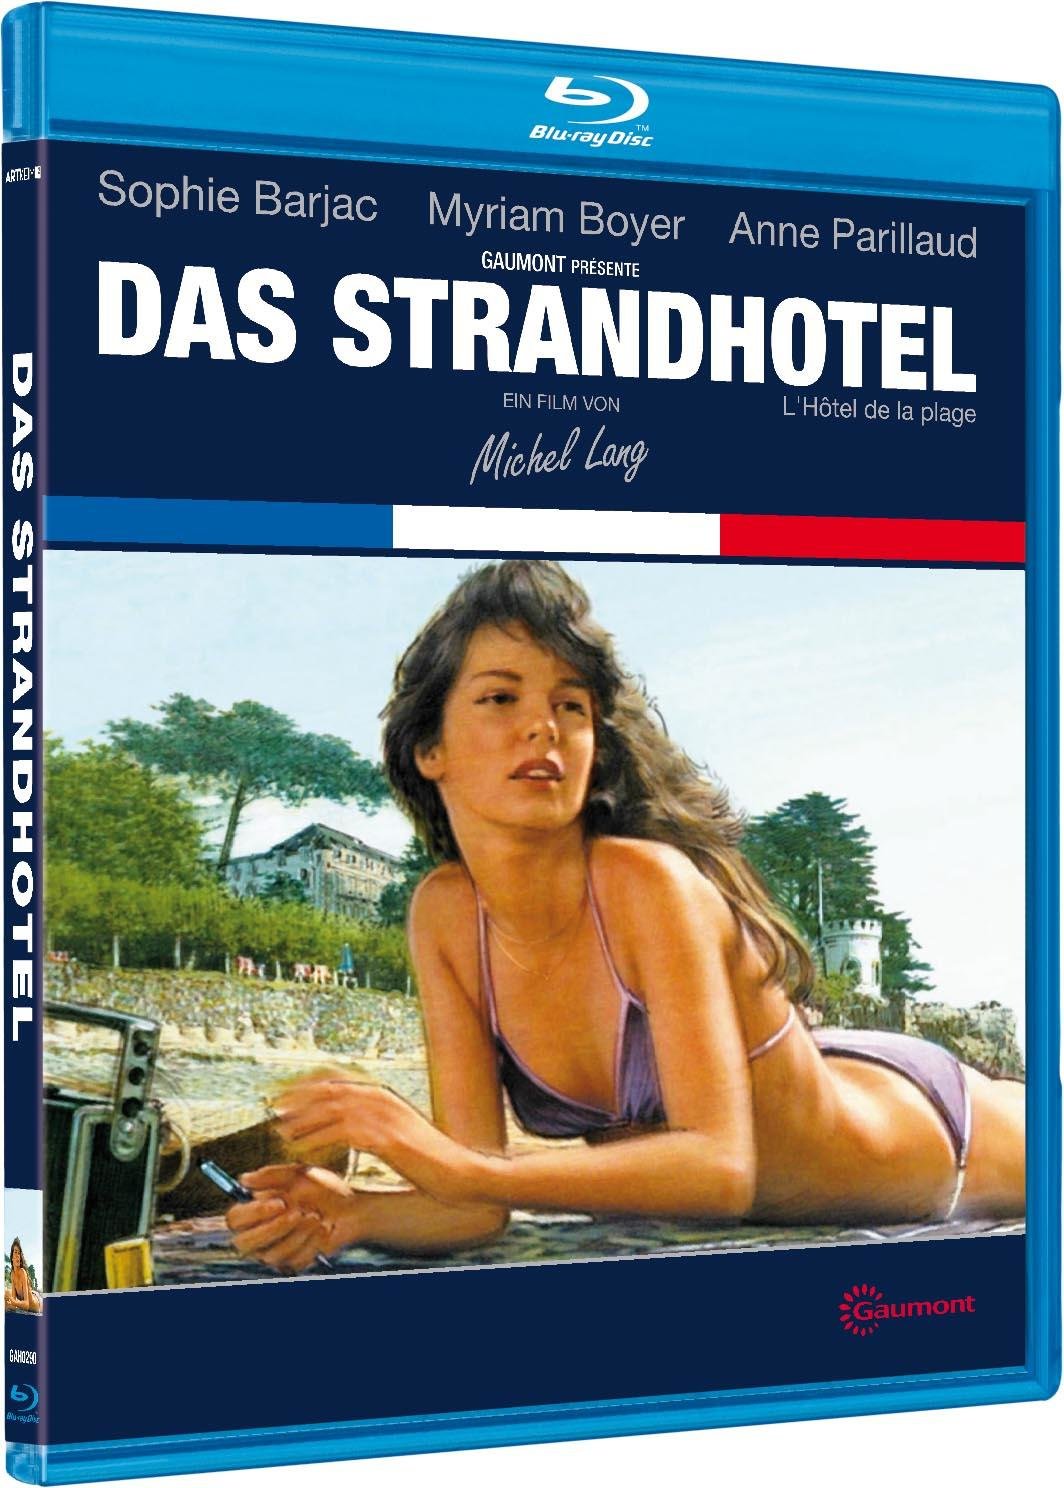 Strandhotel, Das (blu-ray)